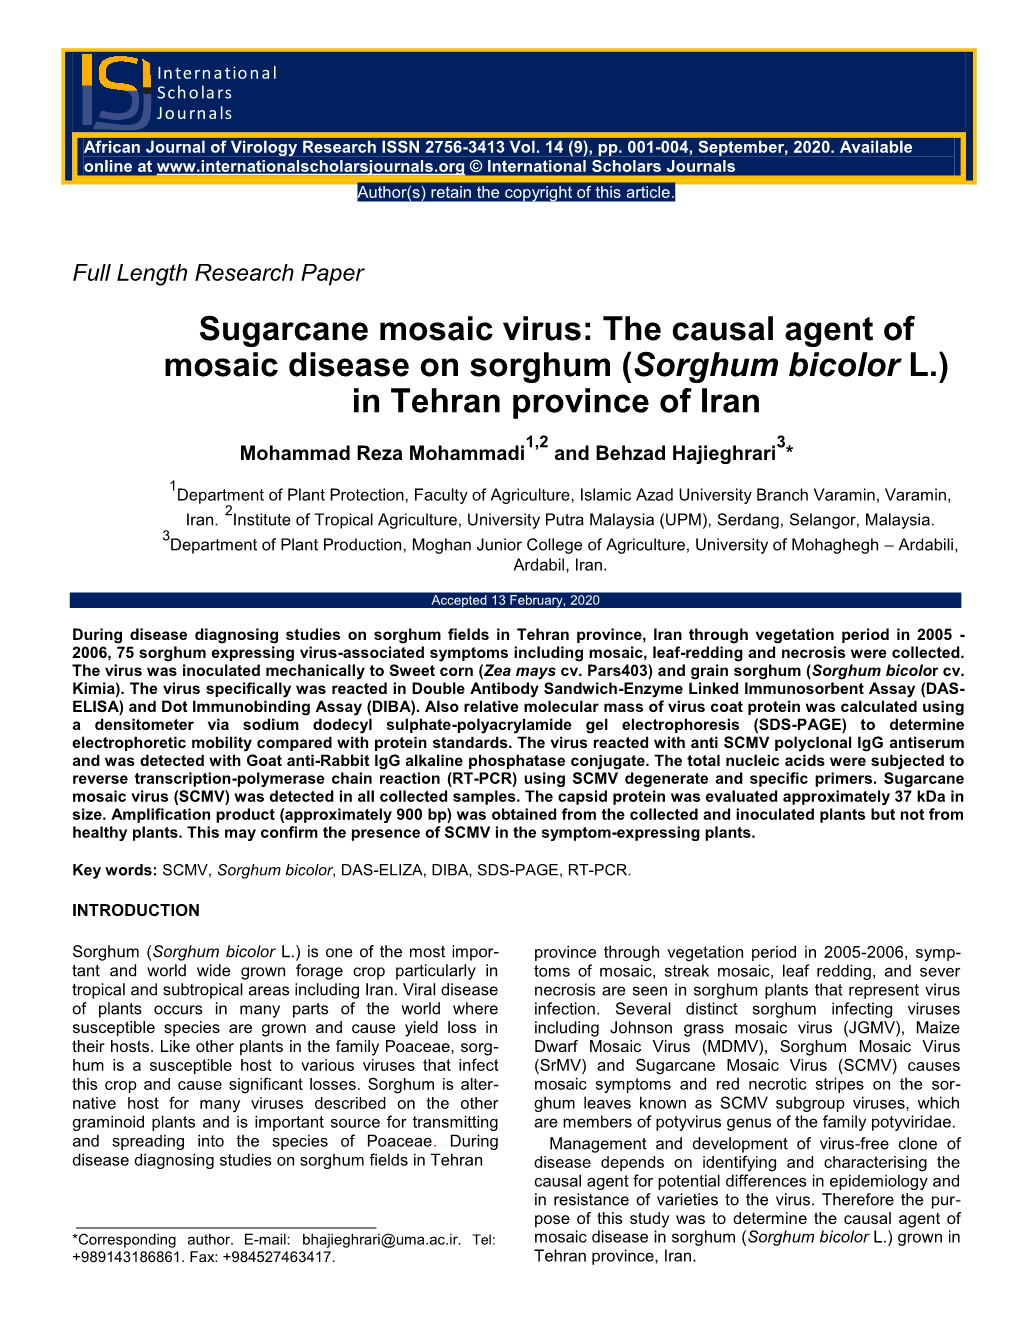 Sugarcane Mosaic Virus: the Causal Agent of Mosaic Disease on Sorghum (Sorghum Bicolor L.) in Tehran Province of Iran